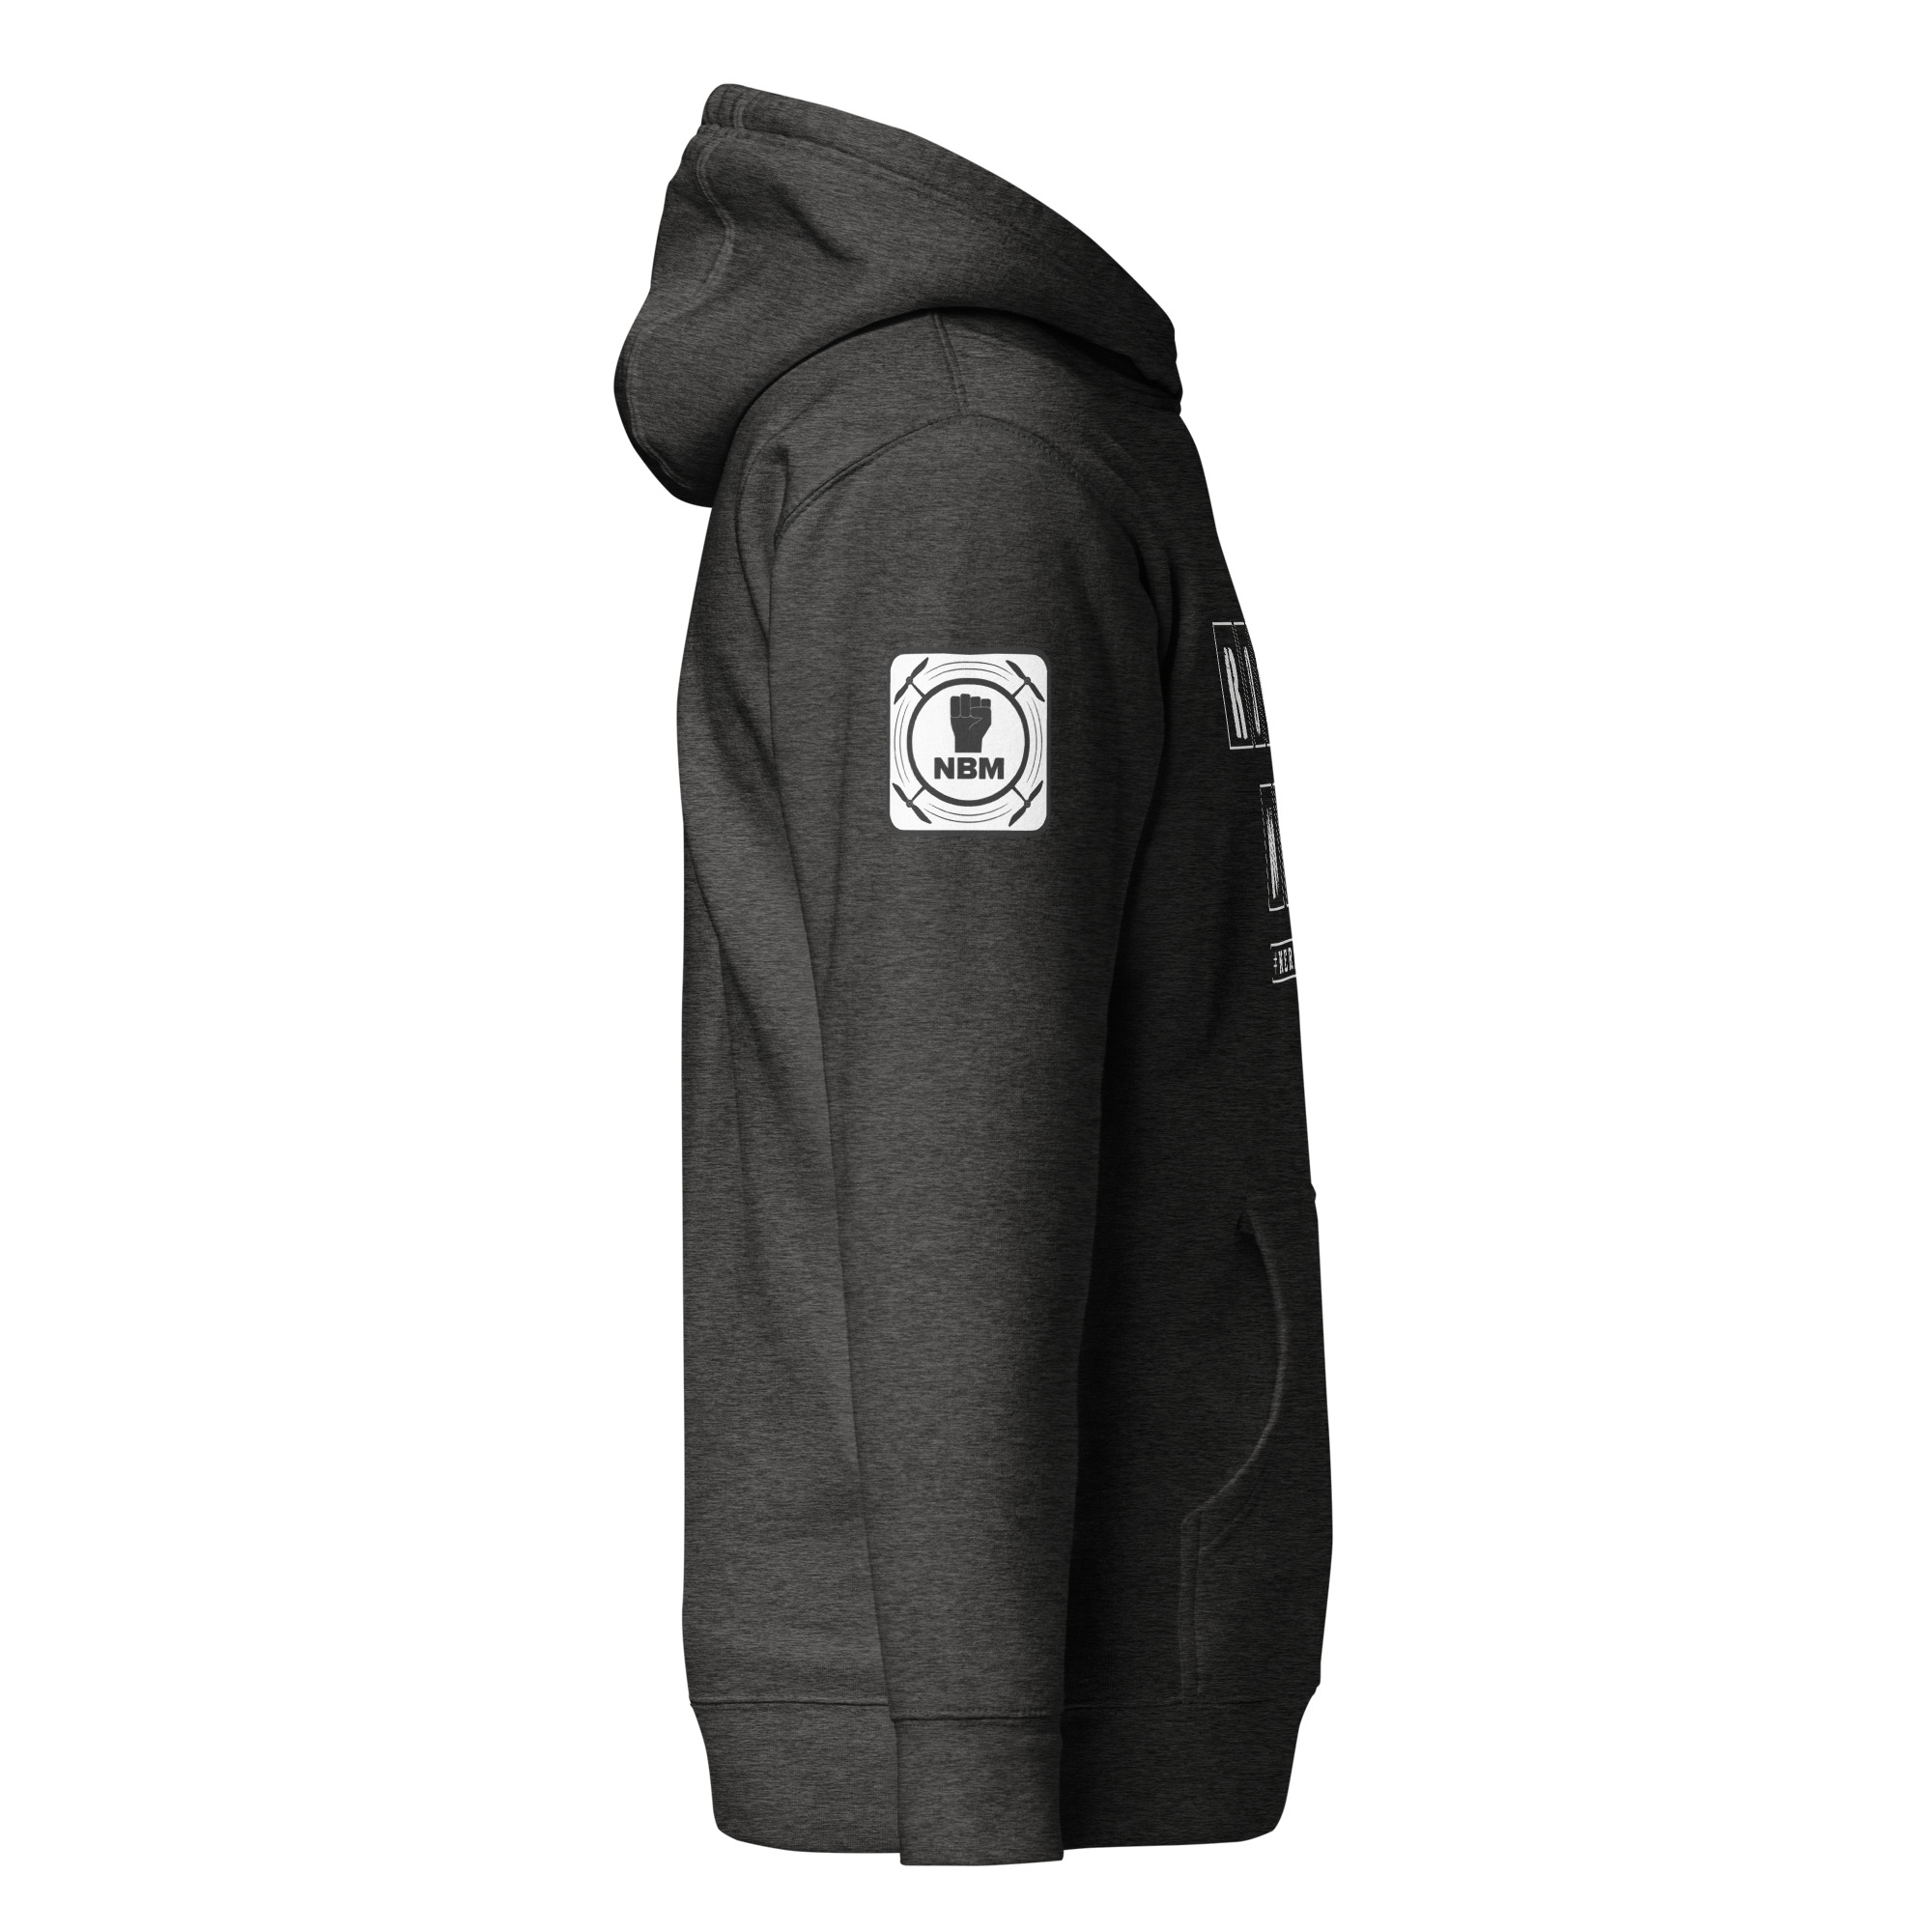 unisex-premium-hoodie-charcoal-heather-right-659eebde5b1e6.jpg